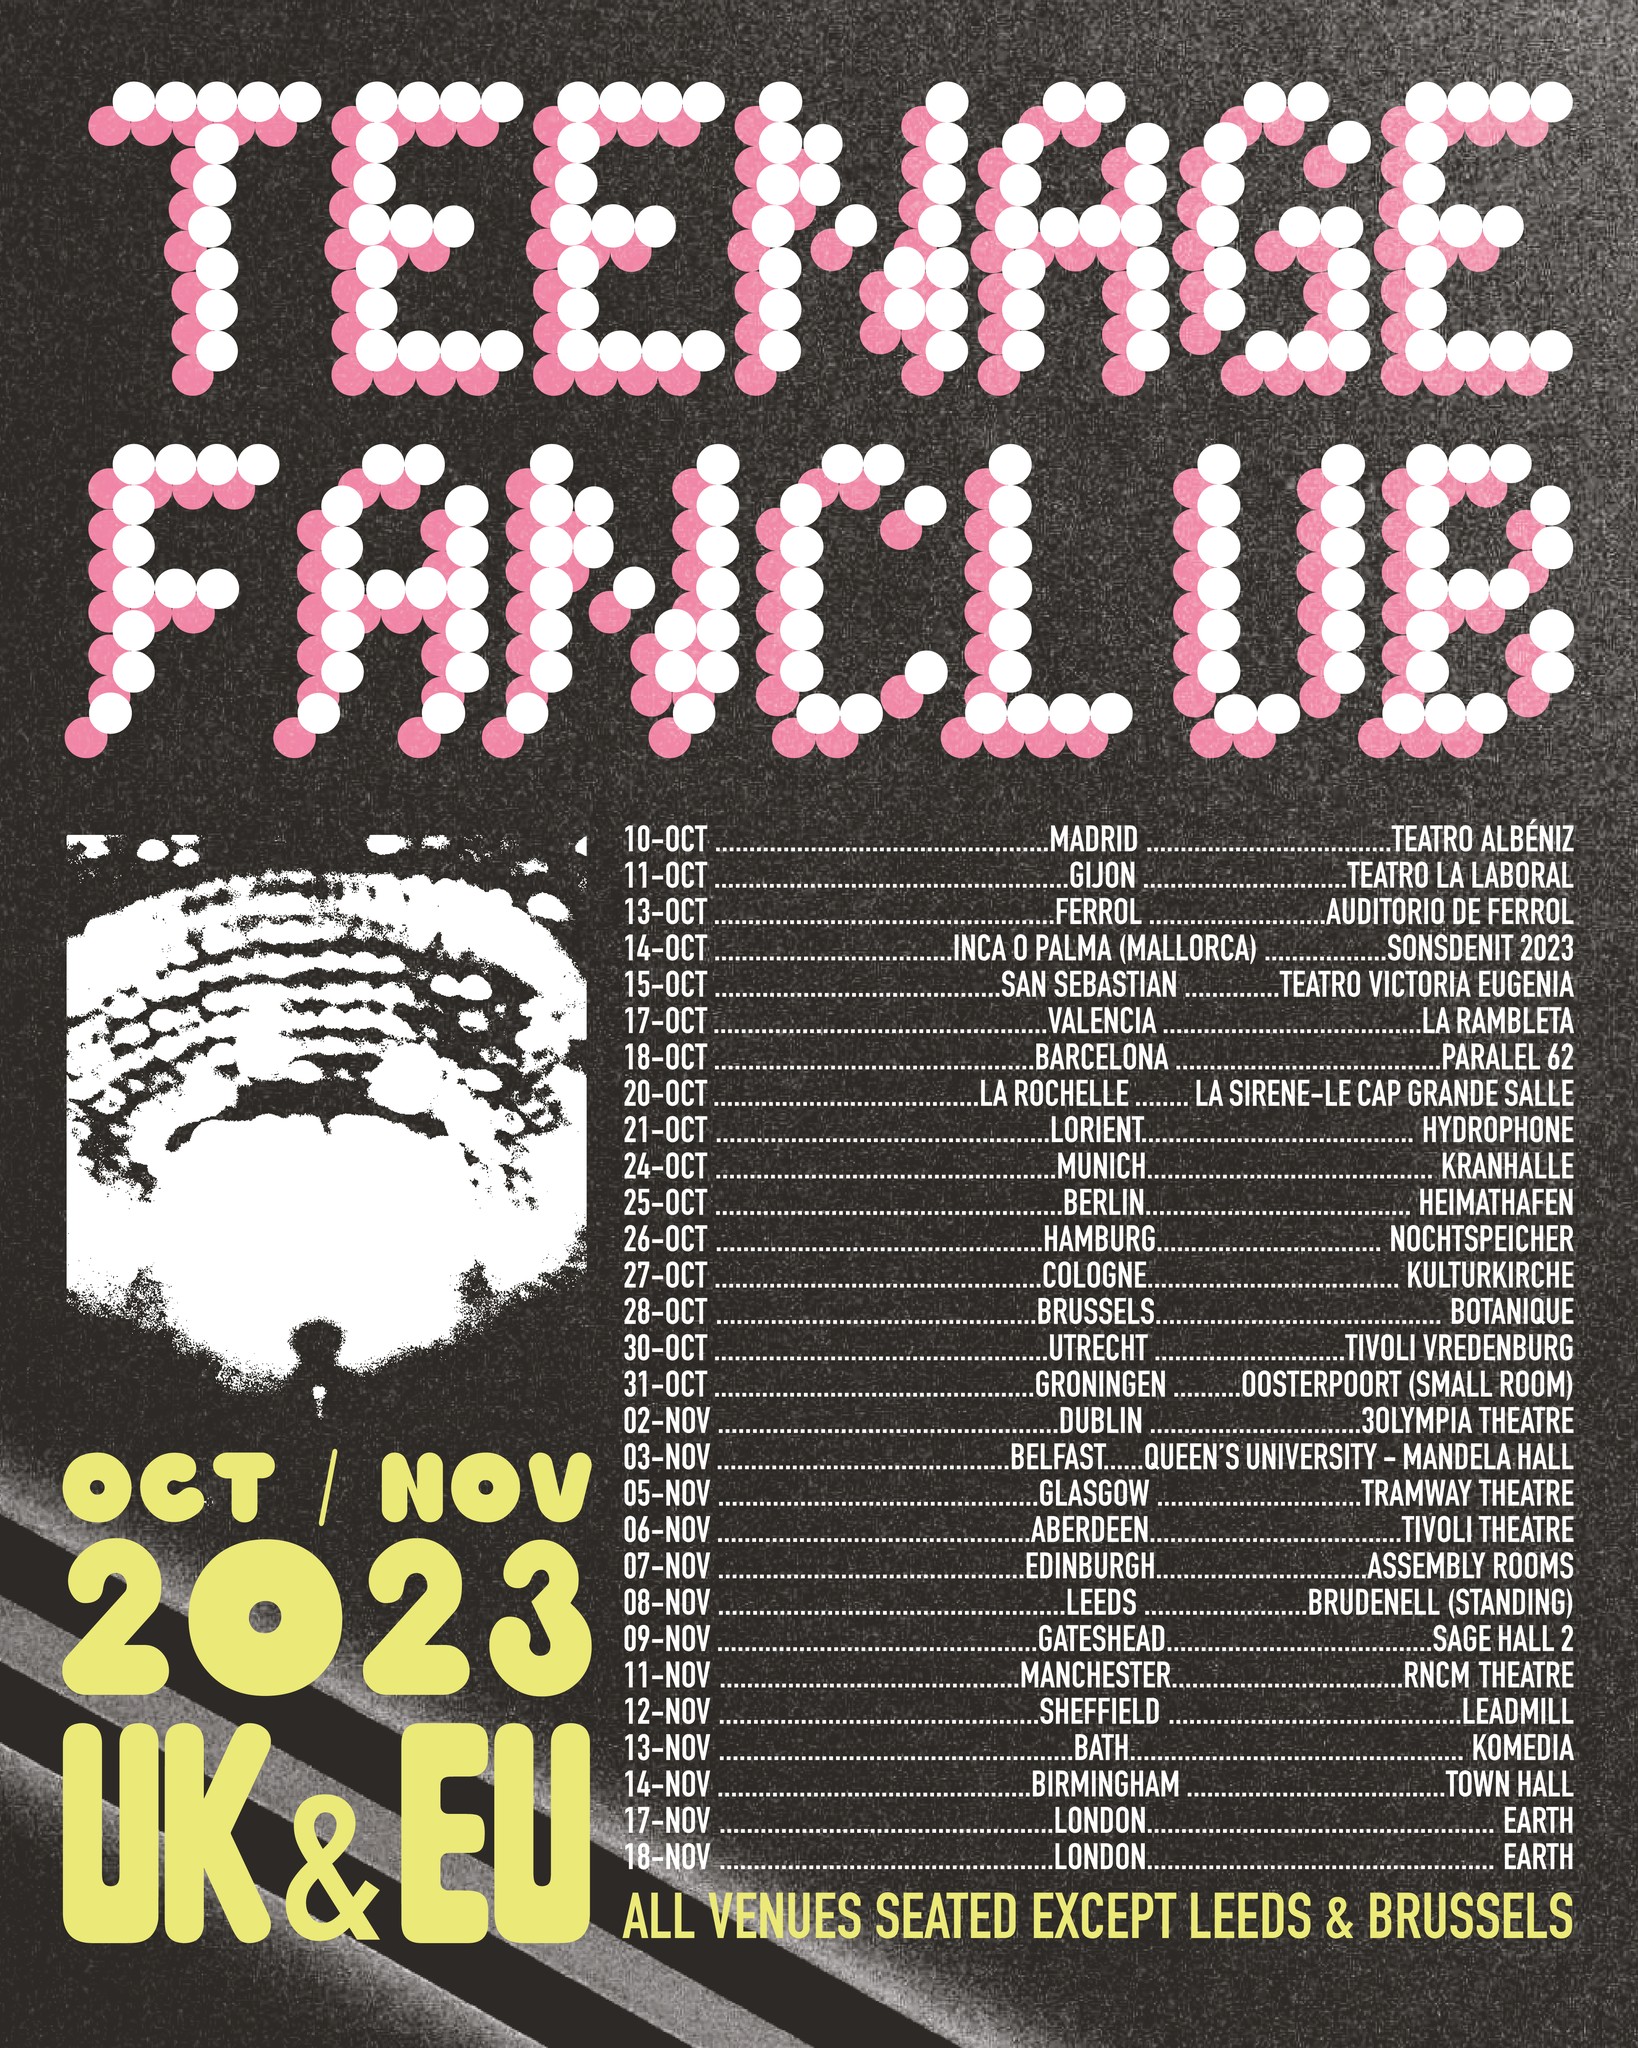 Teenage Fanclub